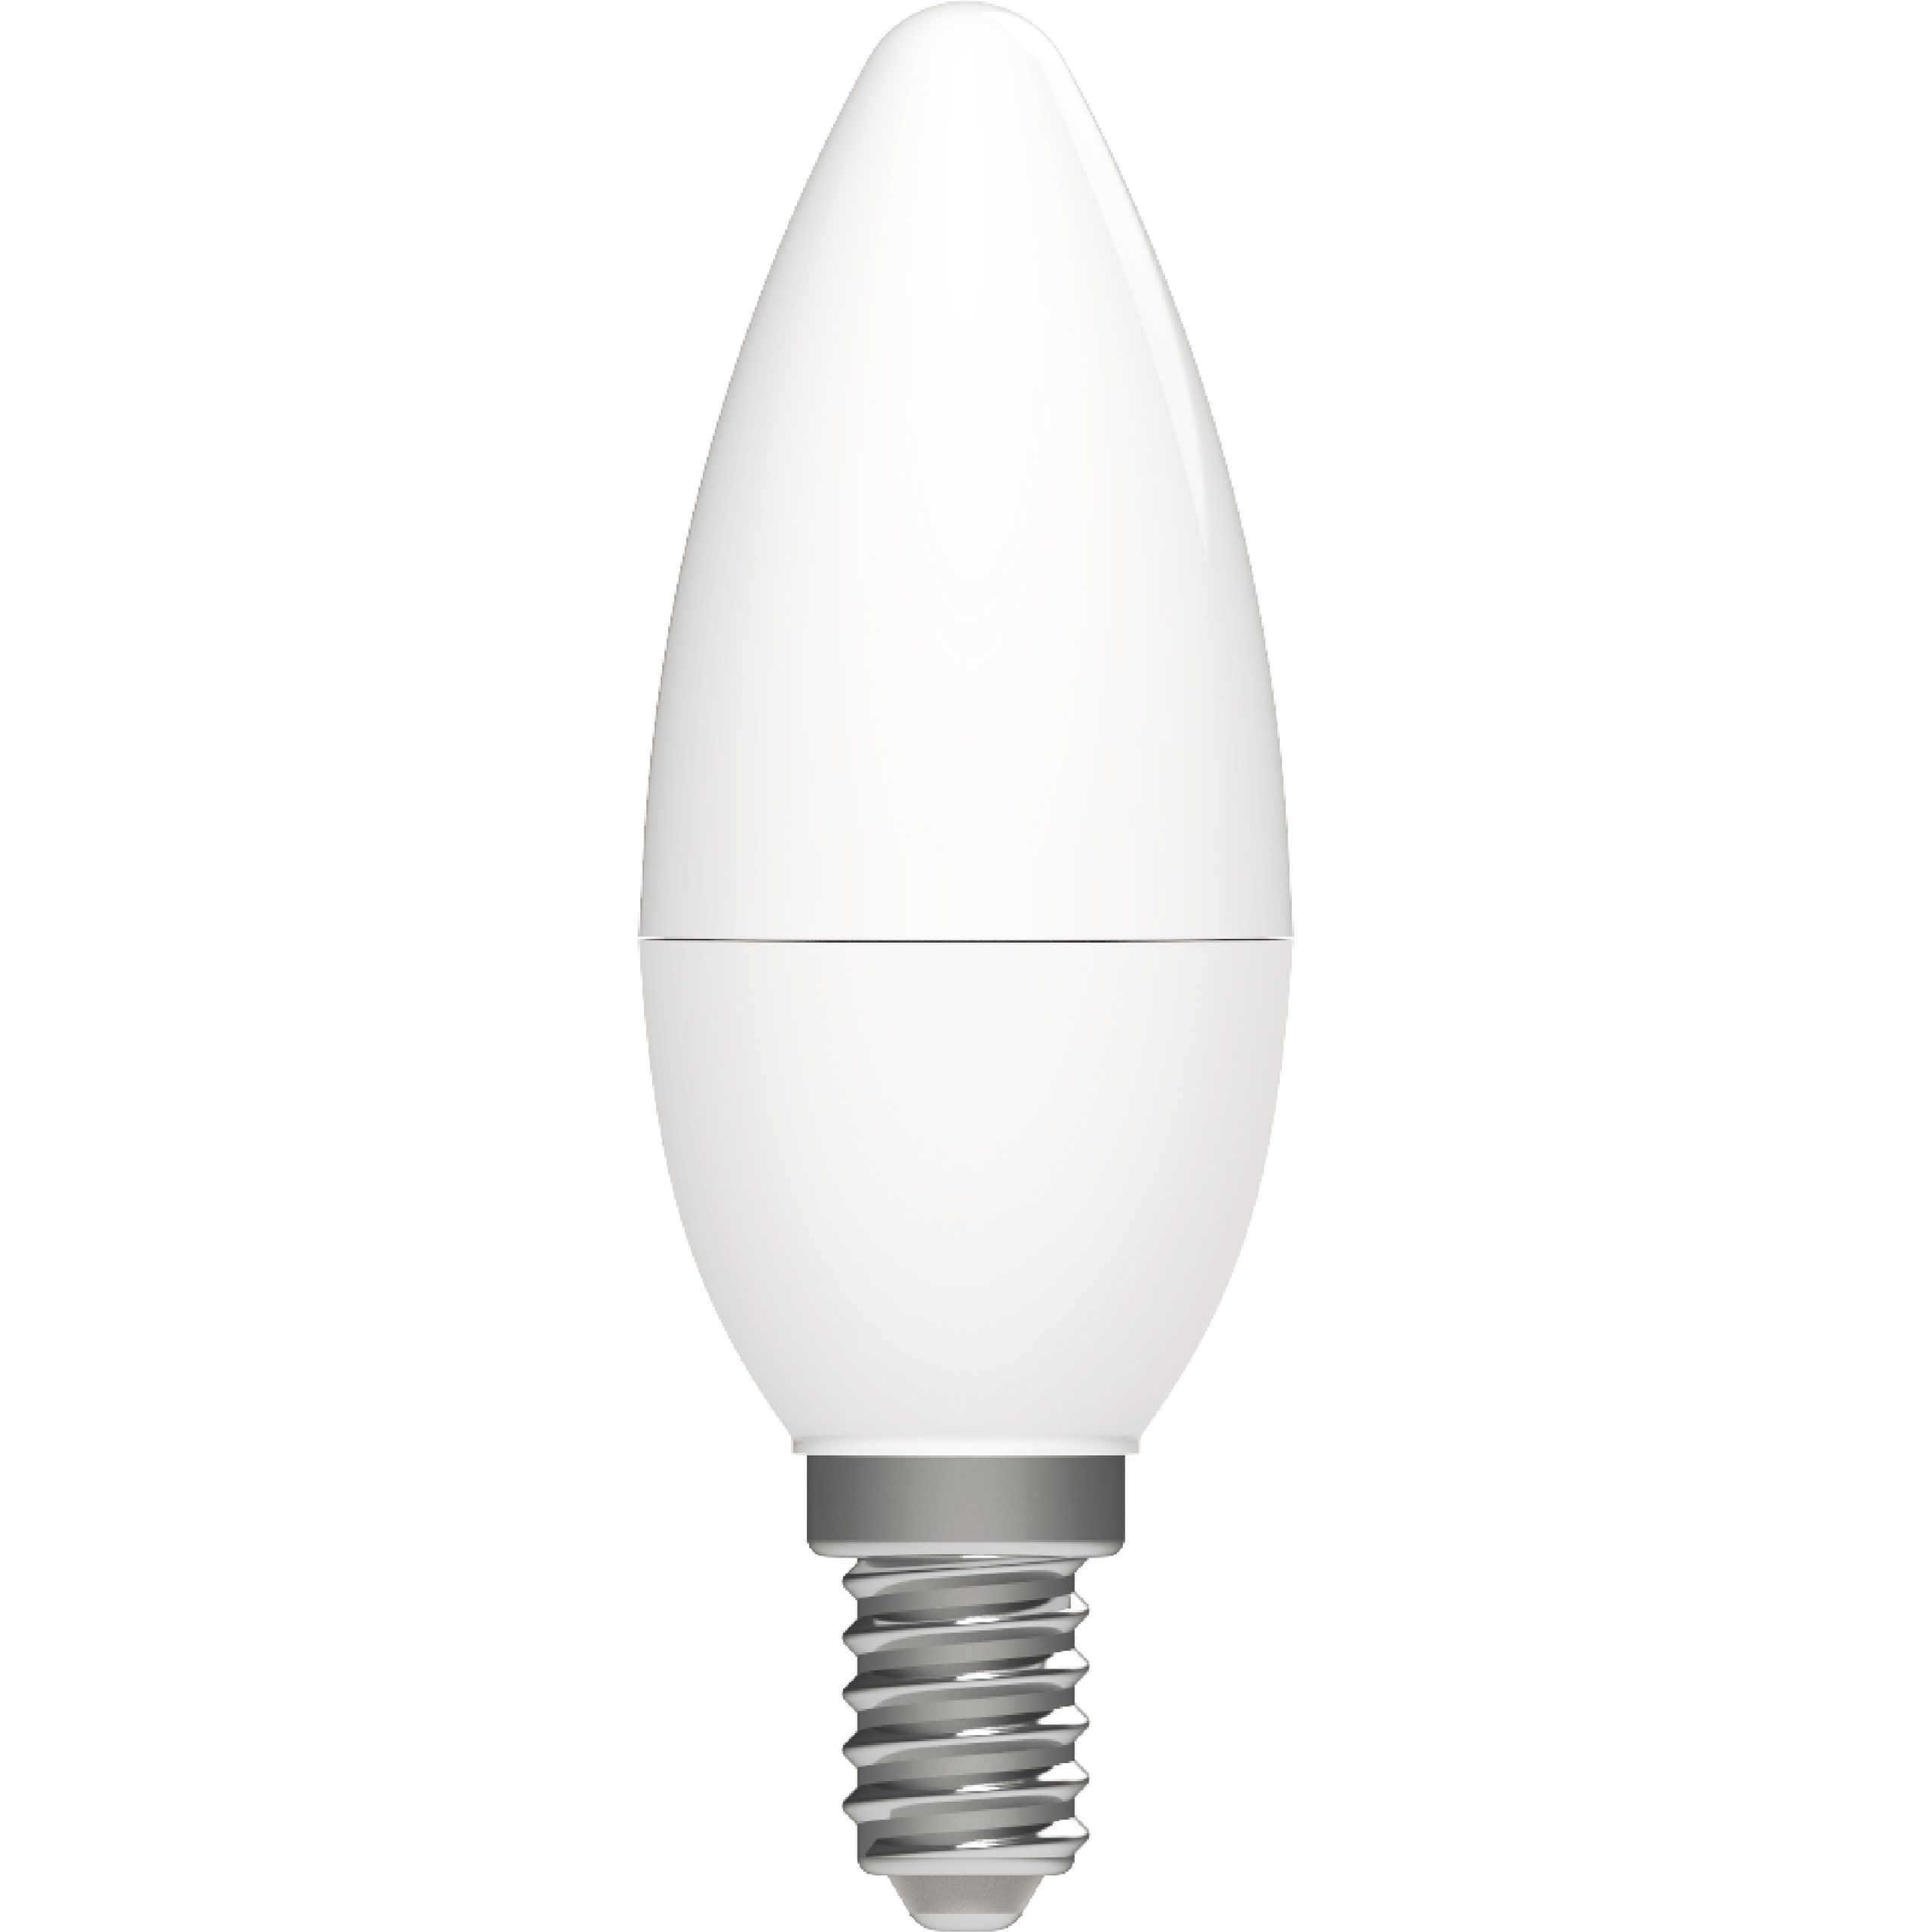 LED's light LED-Leuchtmittel 0620163 LED Birne, E14, E27 2,2W warmweiß Klar A60 - 50.000h Haltbarkeit